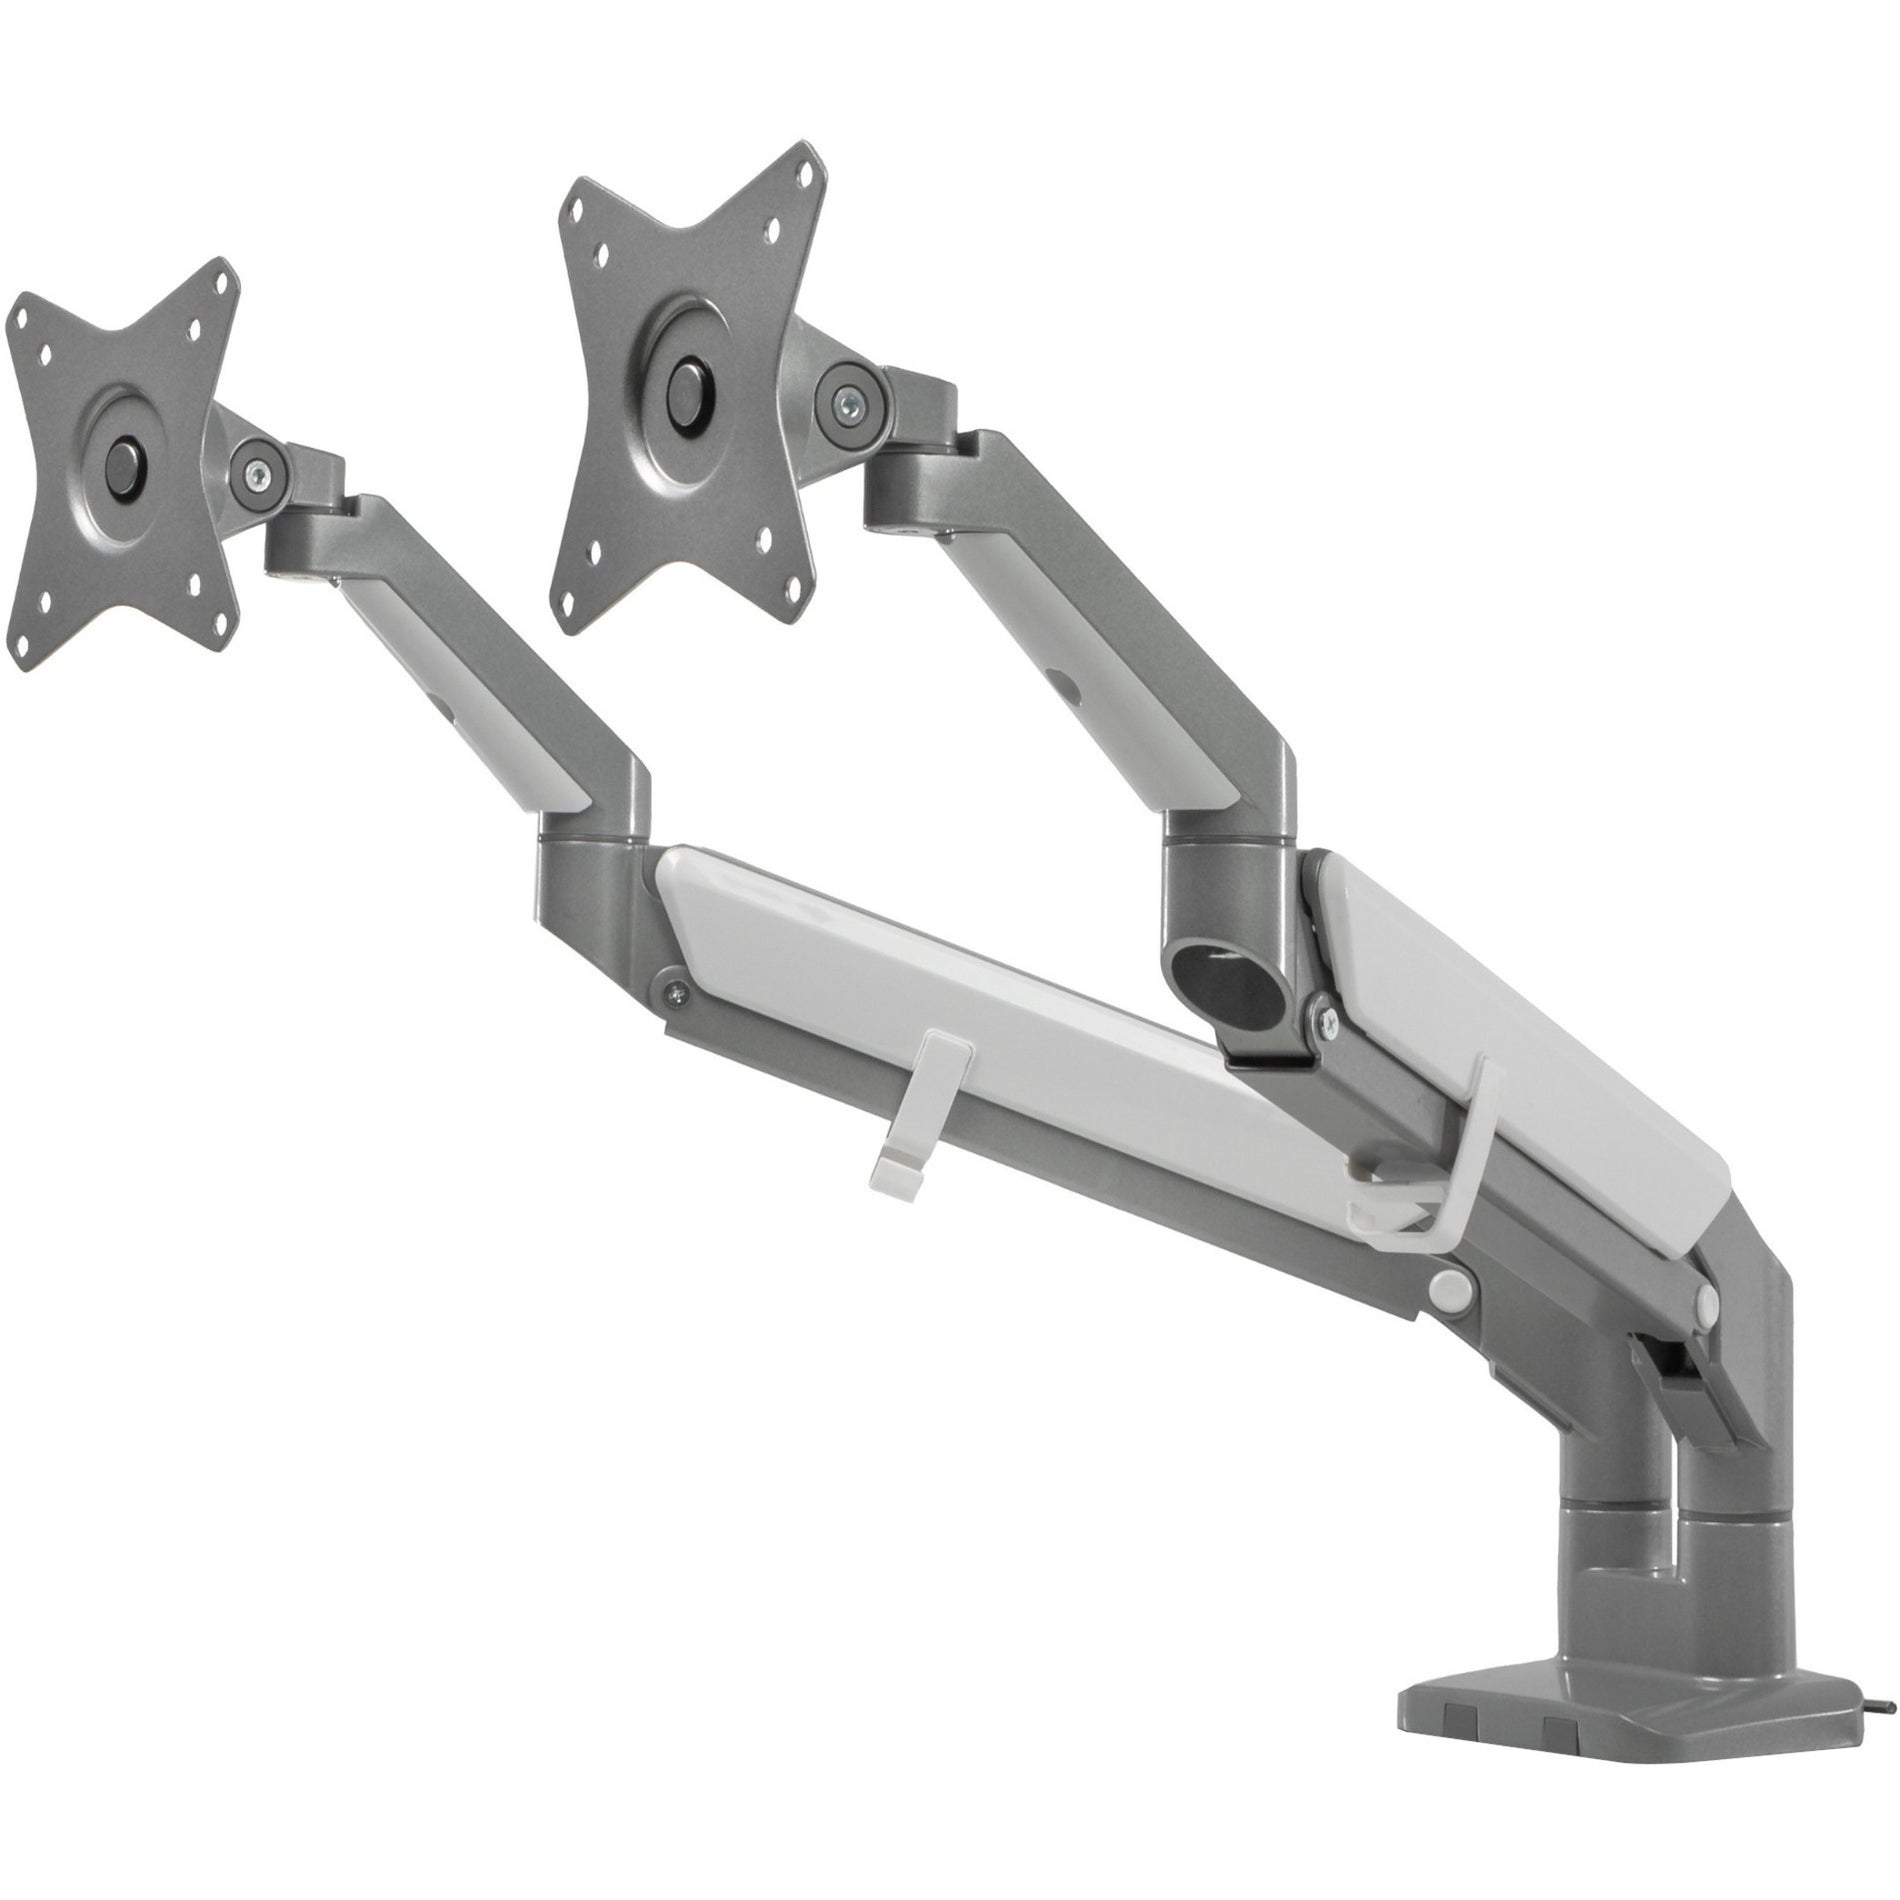 Ergotech ALIGN-2-SLV Monitor Arm, Articulating, Height Adjustable, 39.60 lb Load Capacity